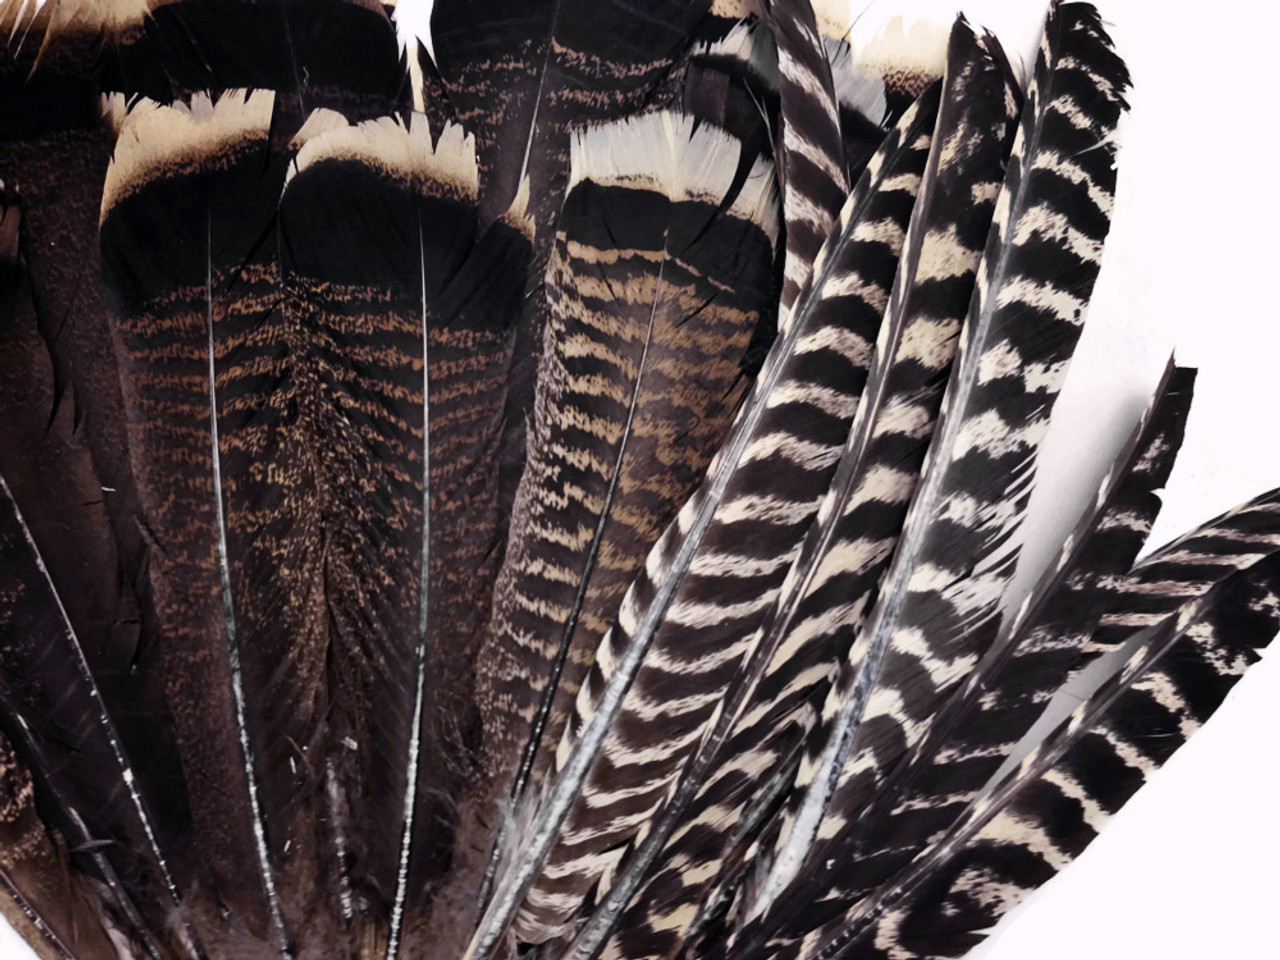 Burgundy Turkey Plumage Feathers - Feathergirl